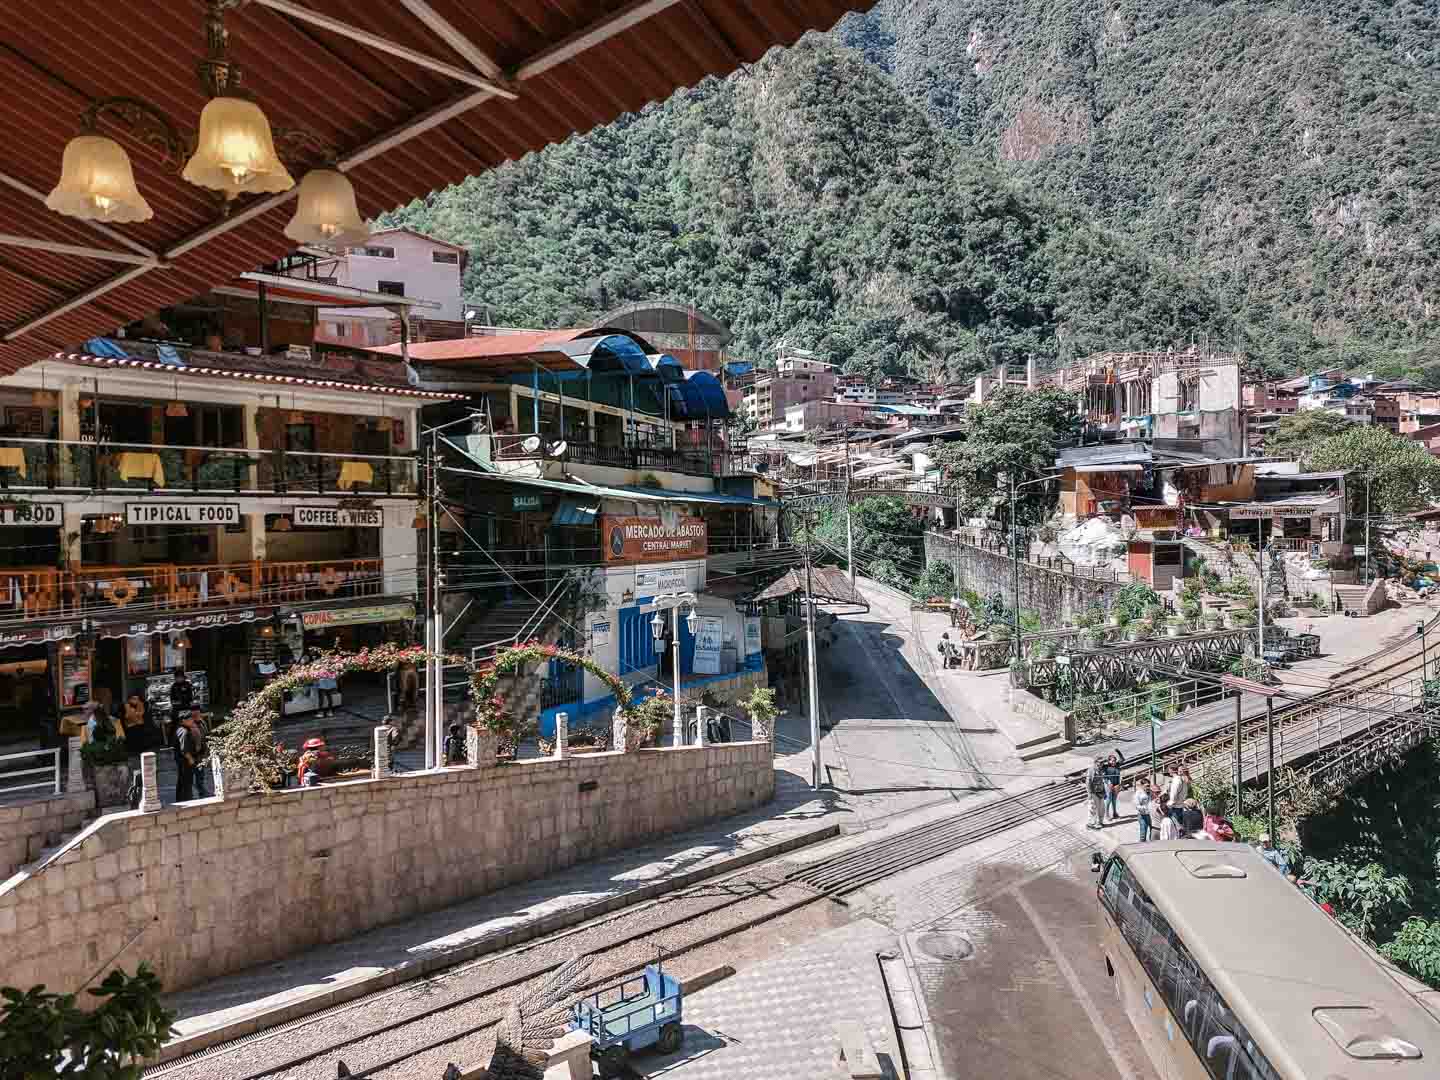 The closest town to Machu Picchu